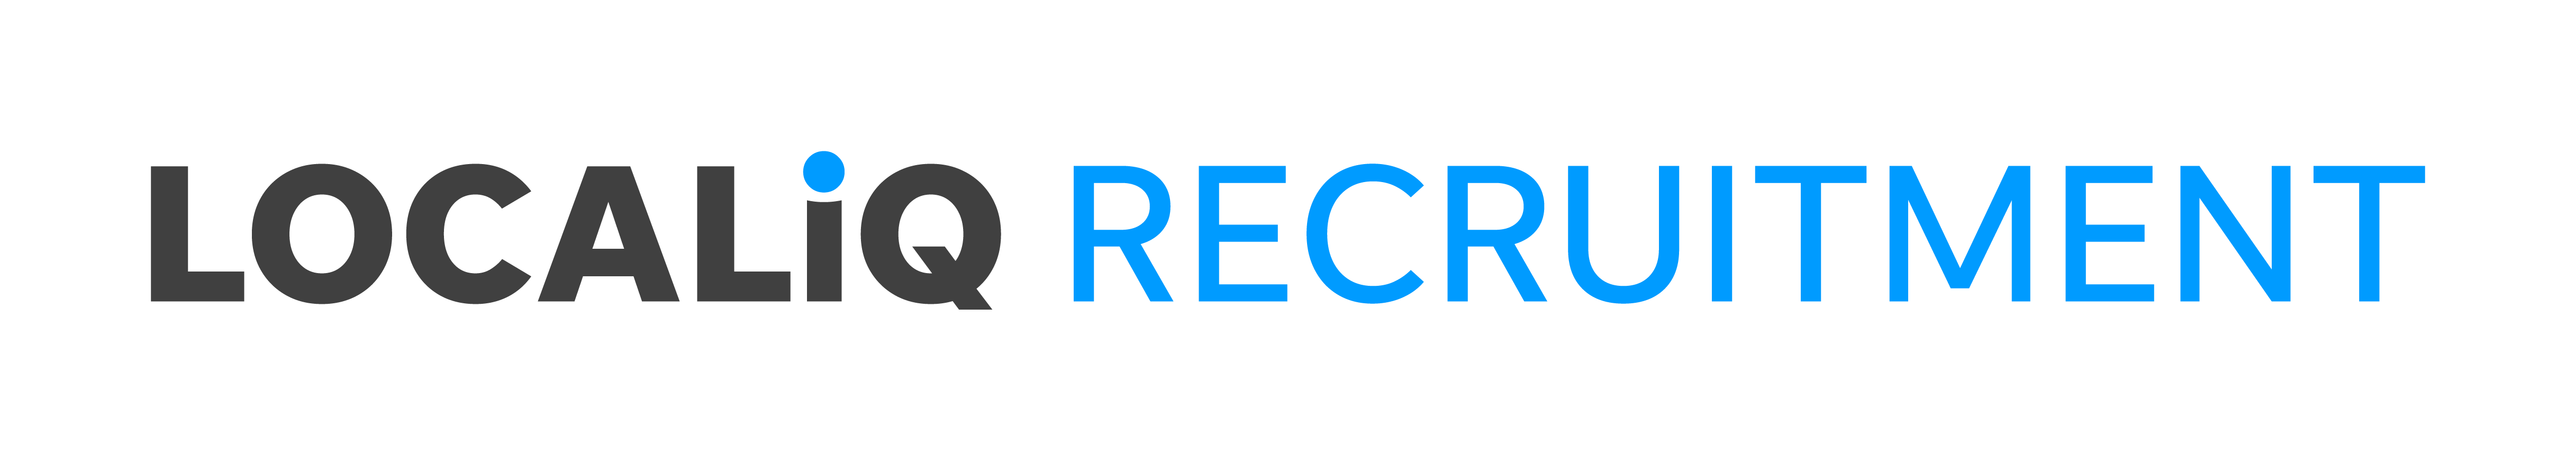 LOCALiQ_Recruit_Logo_Prm-nEds_FullClr_RGB_600.png